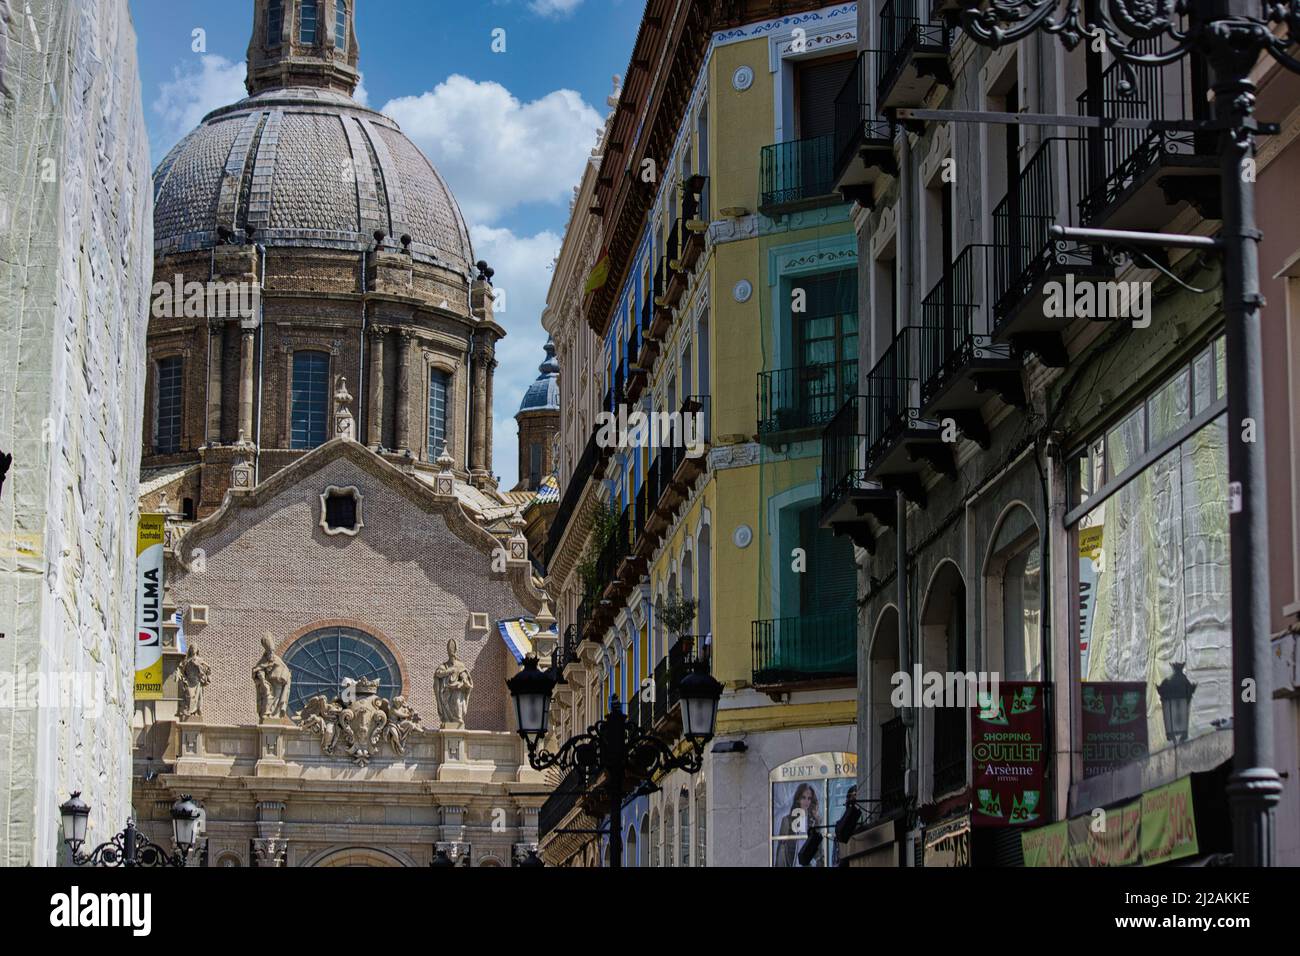 The beautiful city of Zaragoza, Spain, an important tourist and religious destination. Stock Photo